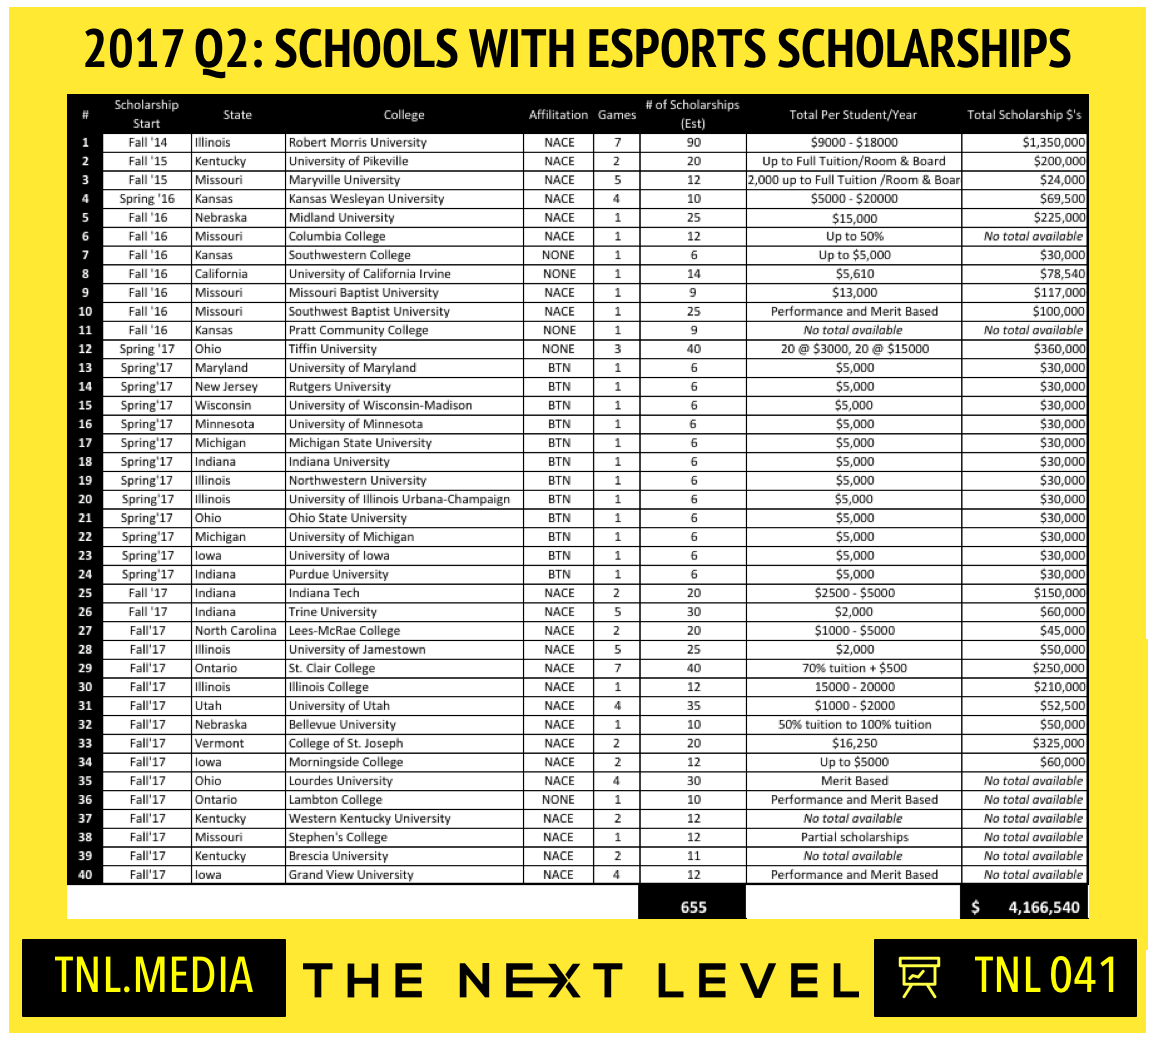 TNL Infographic 041: 2017 Q2 eSports Schools With Scholarships (Infographic: The Next Level, Source: James Kozachuk)